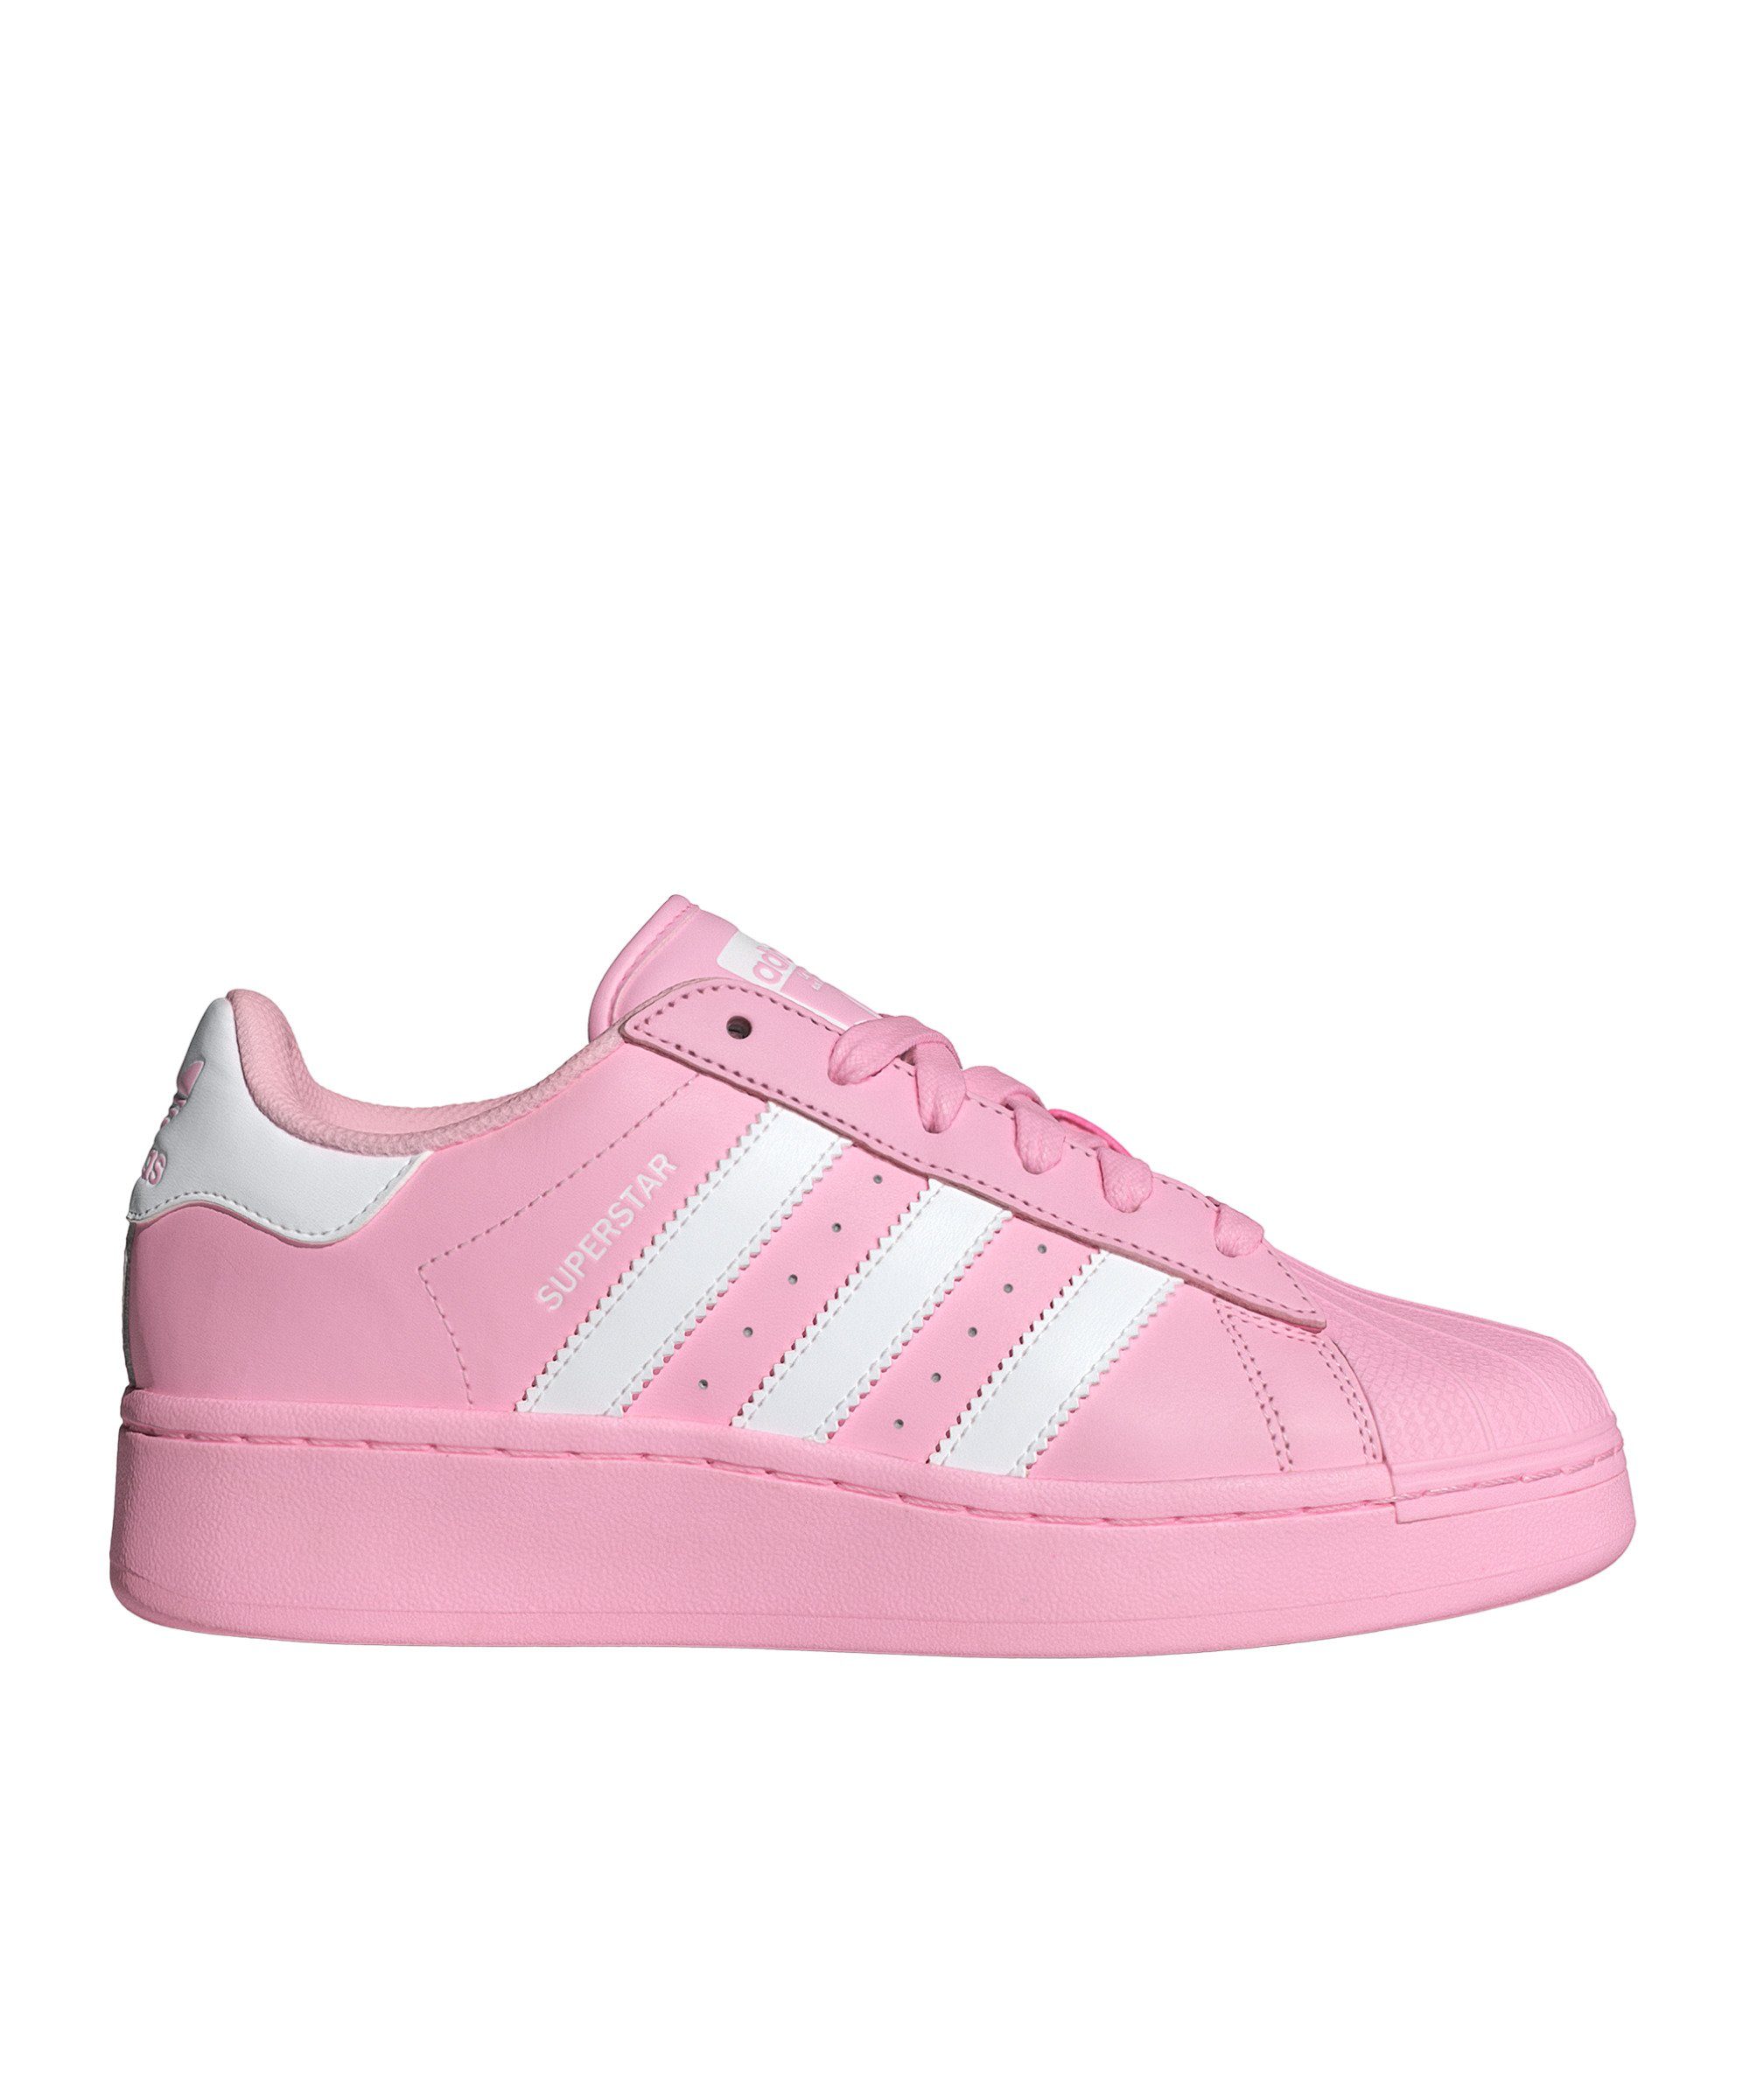 adidas Originals Superstar XLG Damen Sneaker pinkweisspink | Sneaker